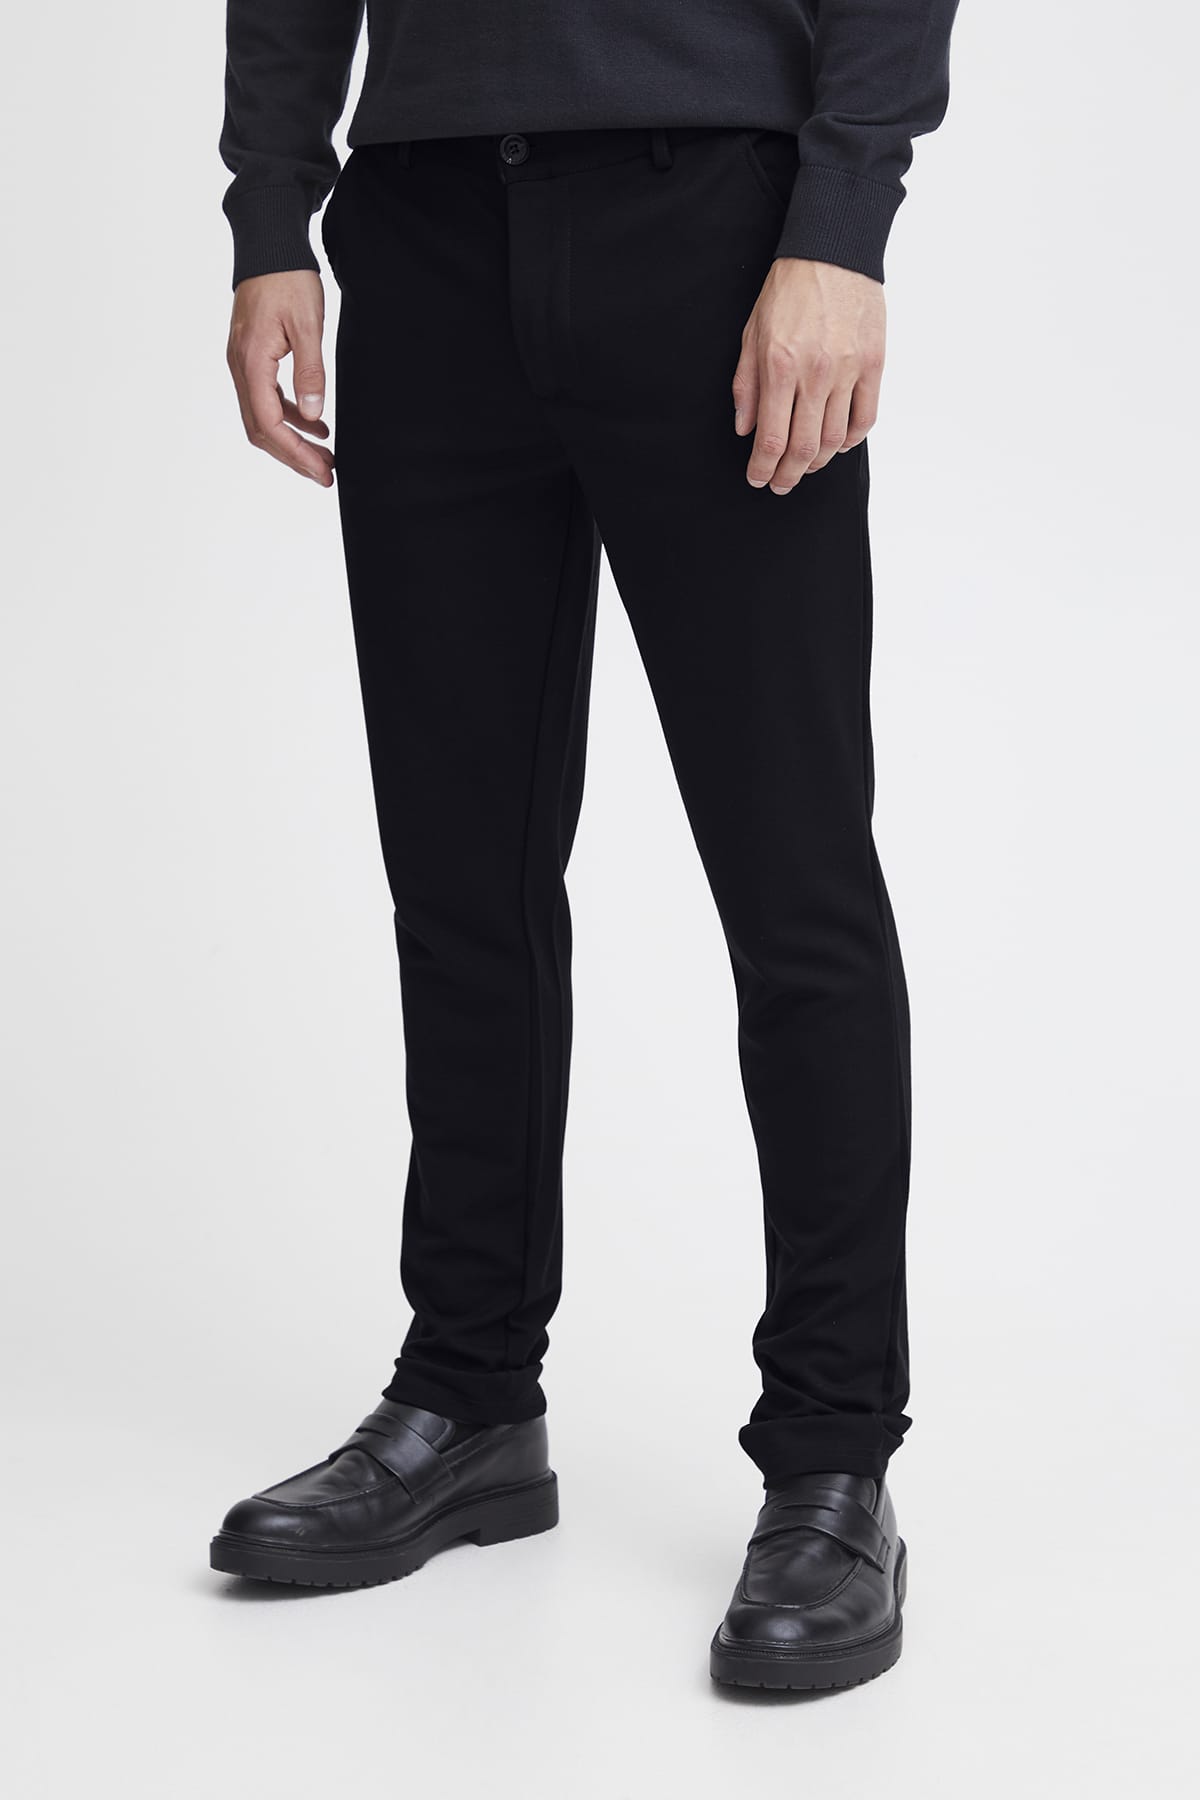 Hosen Pants - plain color Black Hosen Blend 